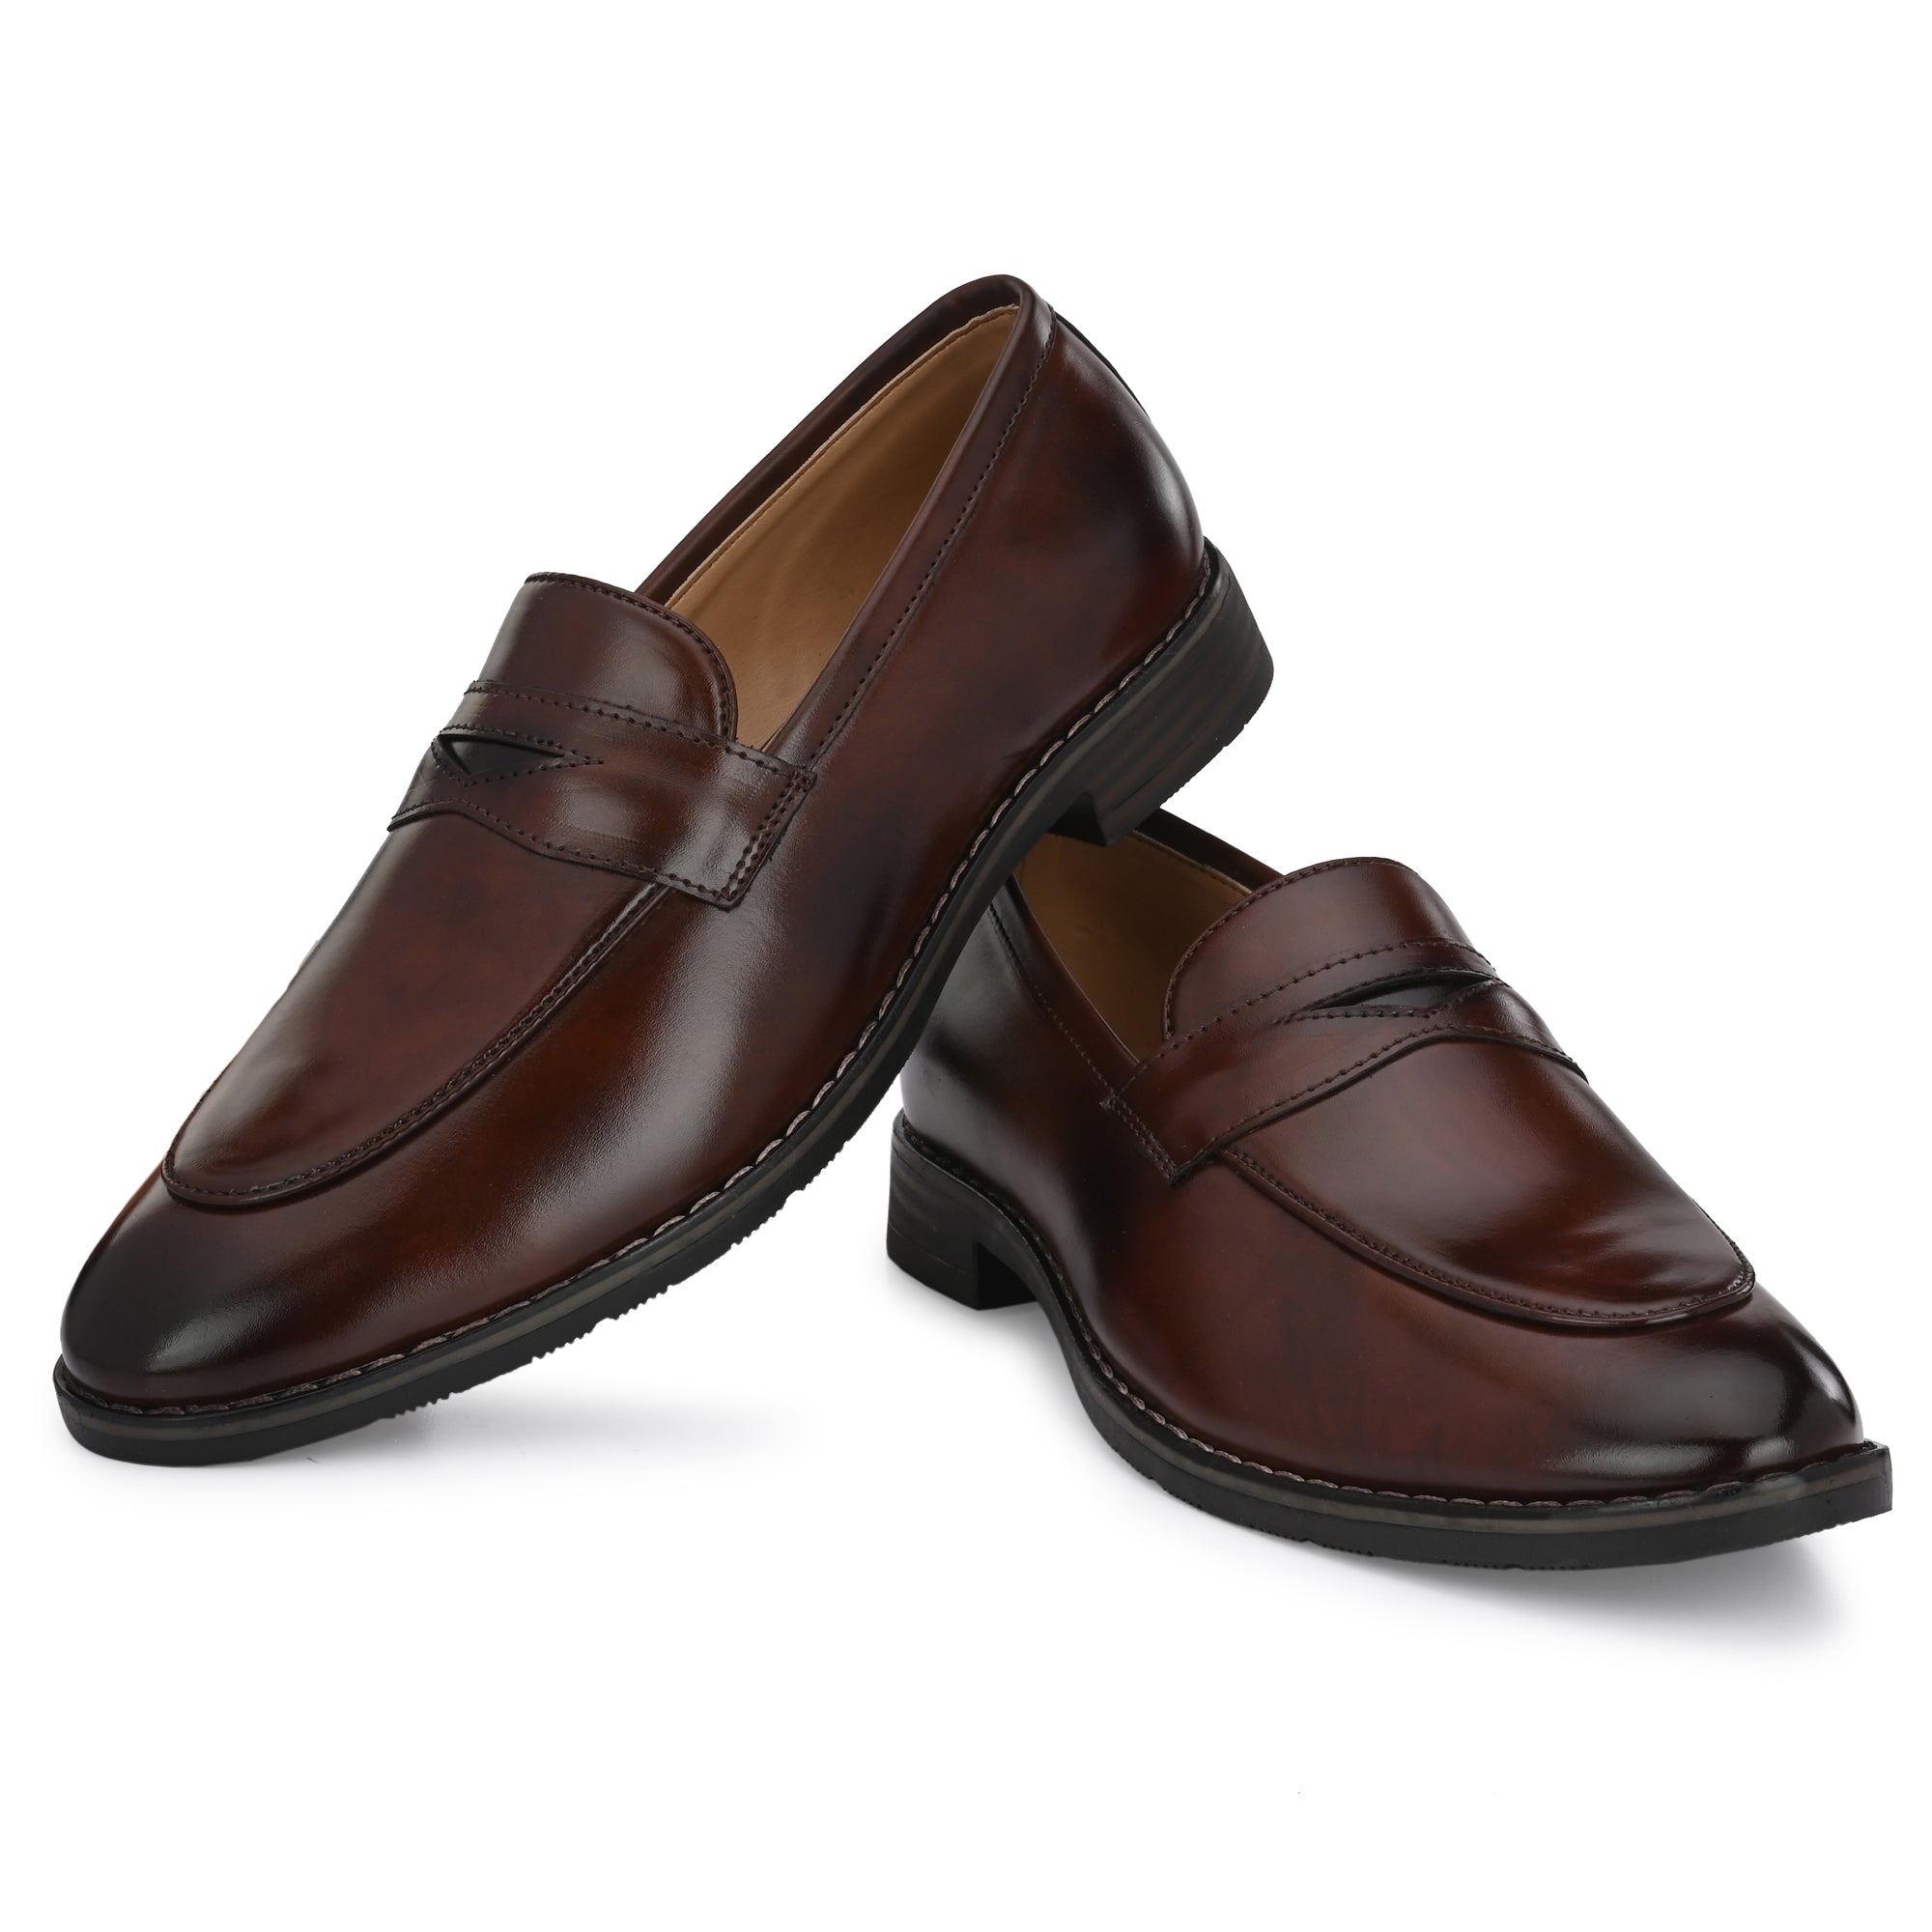 brown-loafers-attitudist-shoes-for-men-sp8b